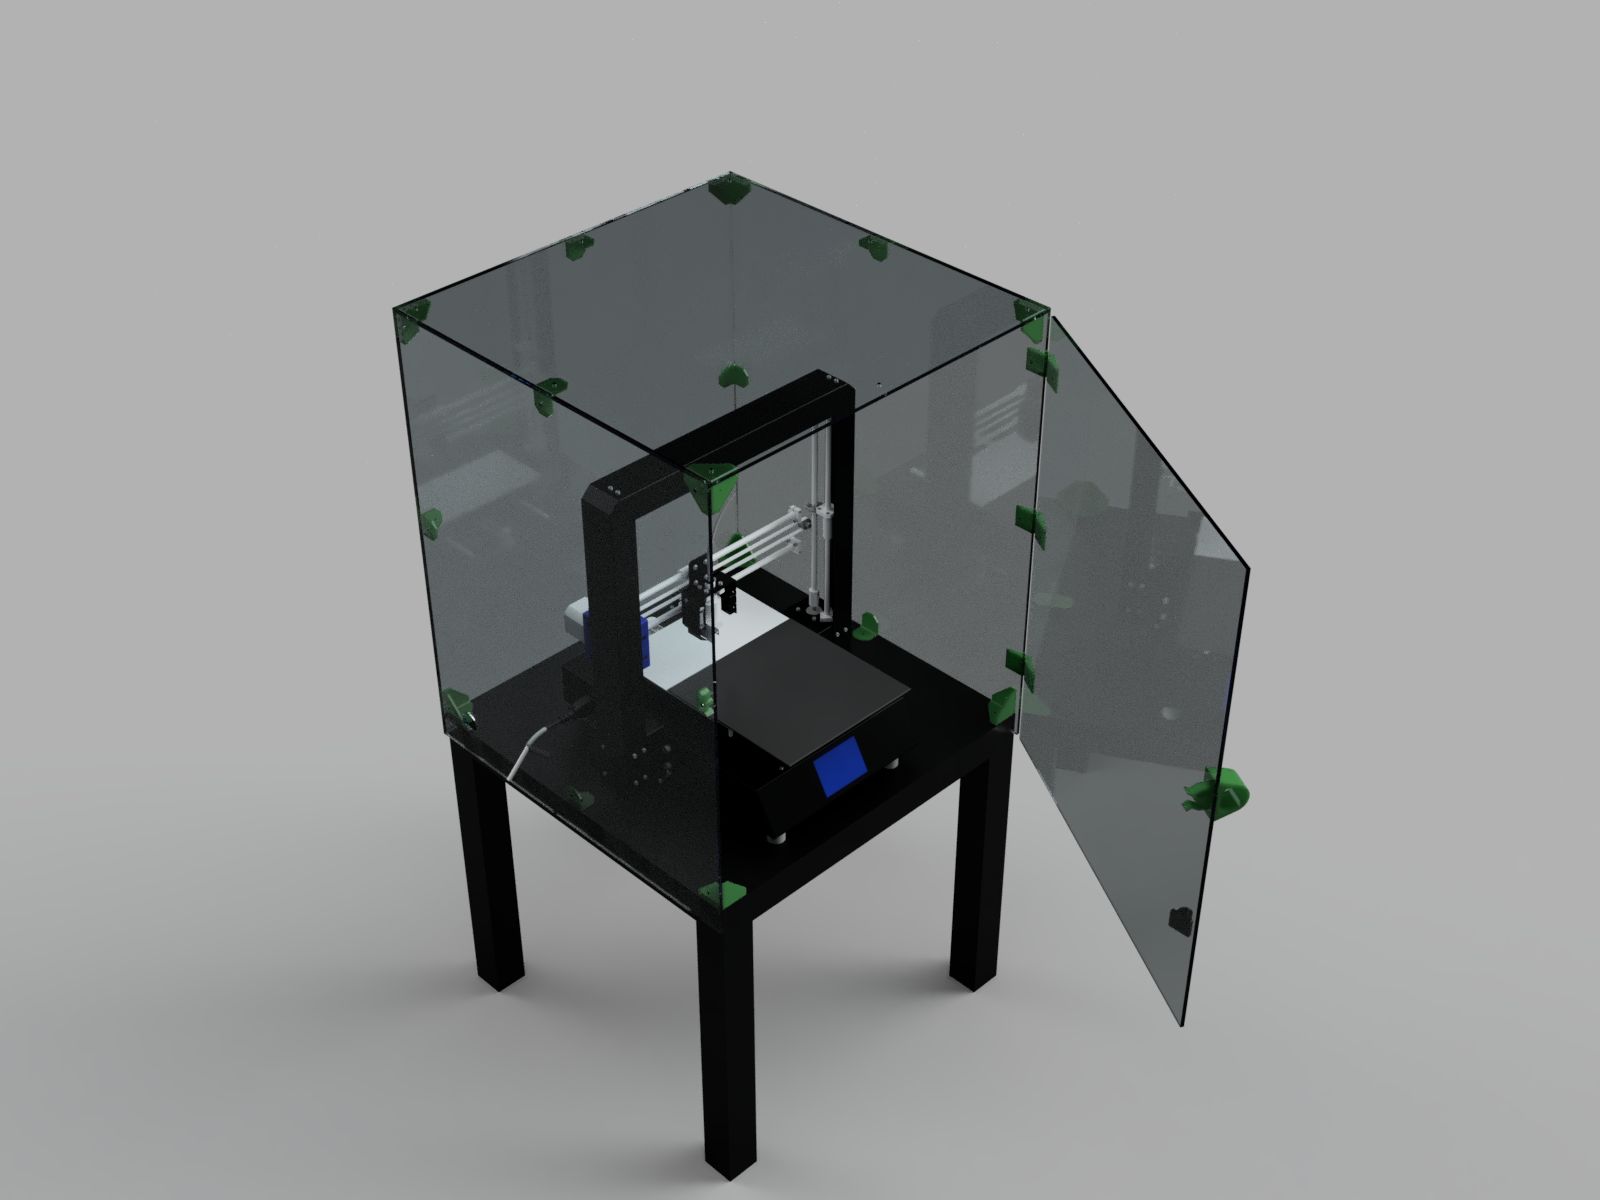 box jellyfish 3D Printer enclosure IKEA LACK table